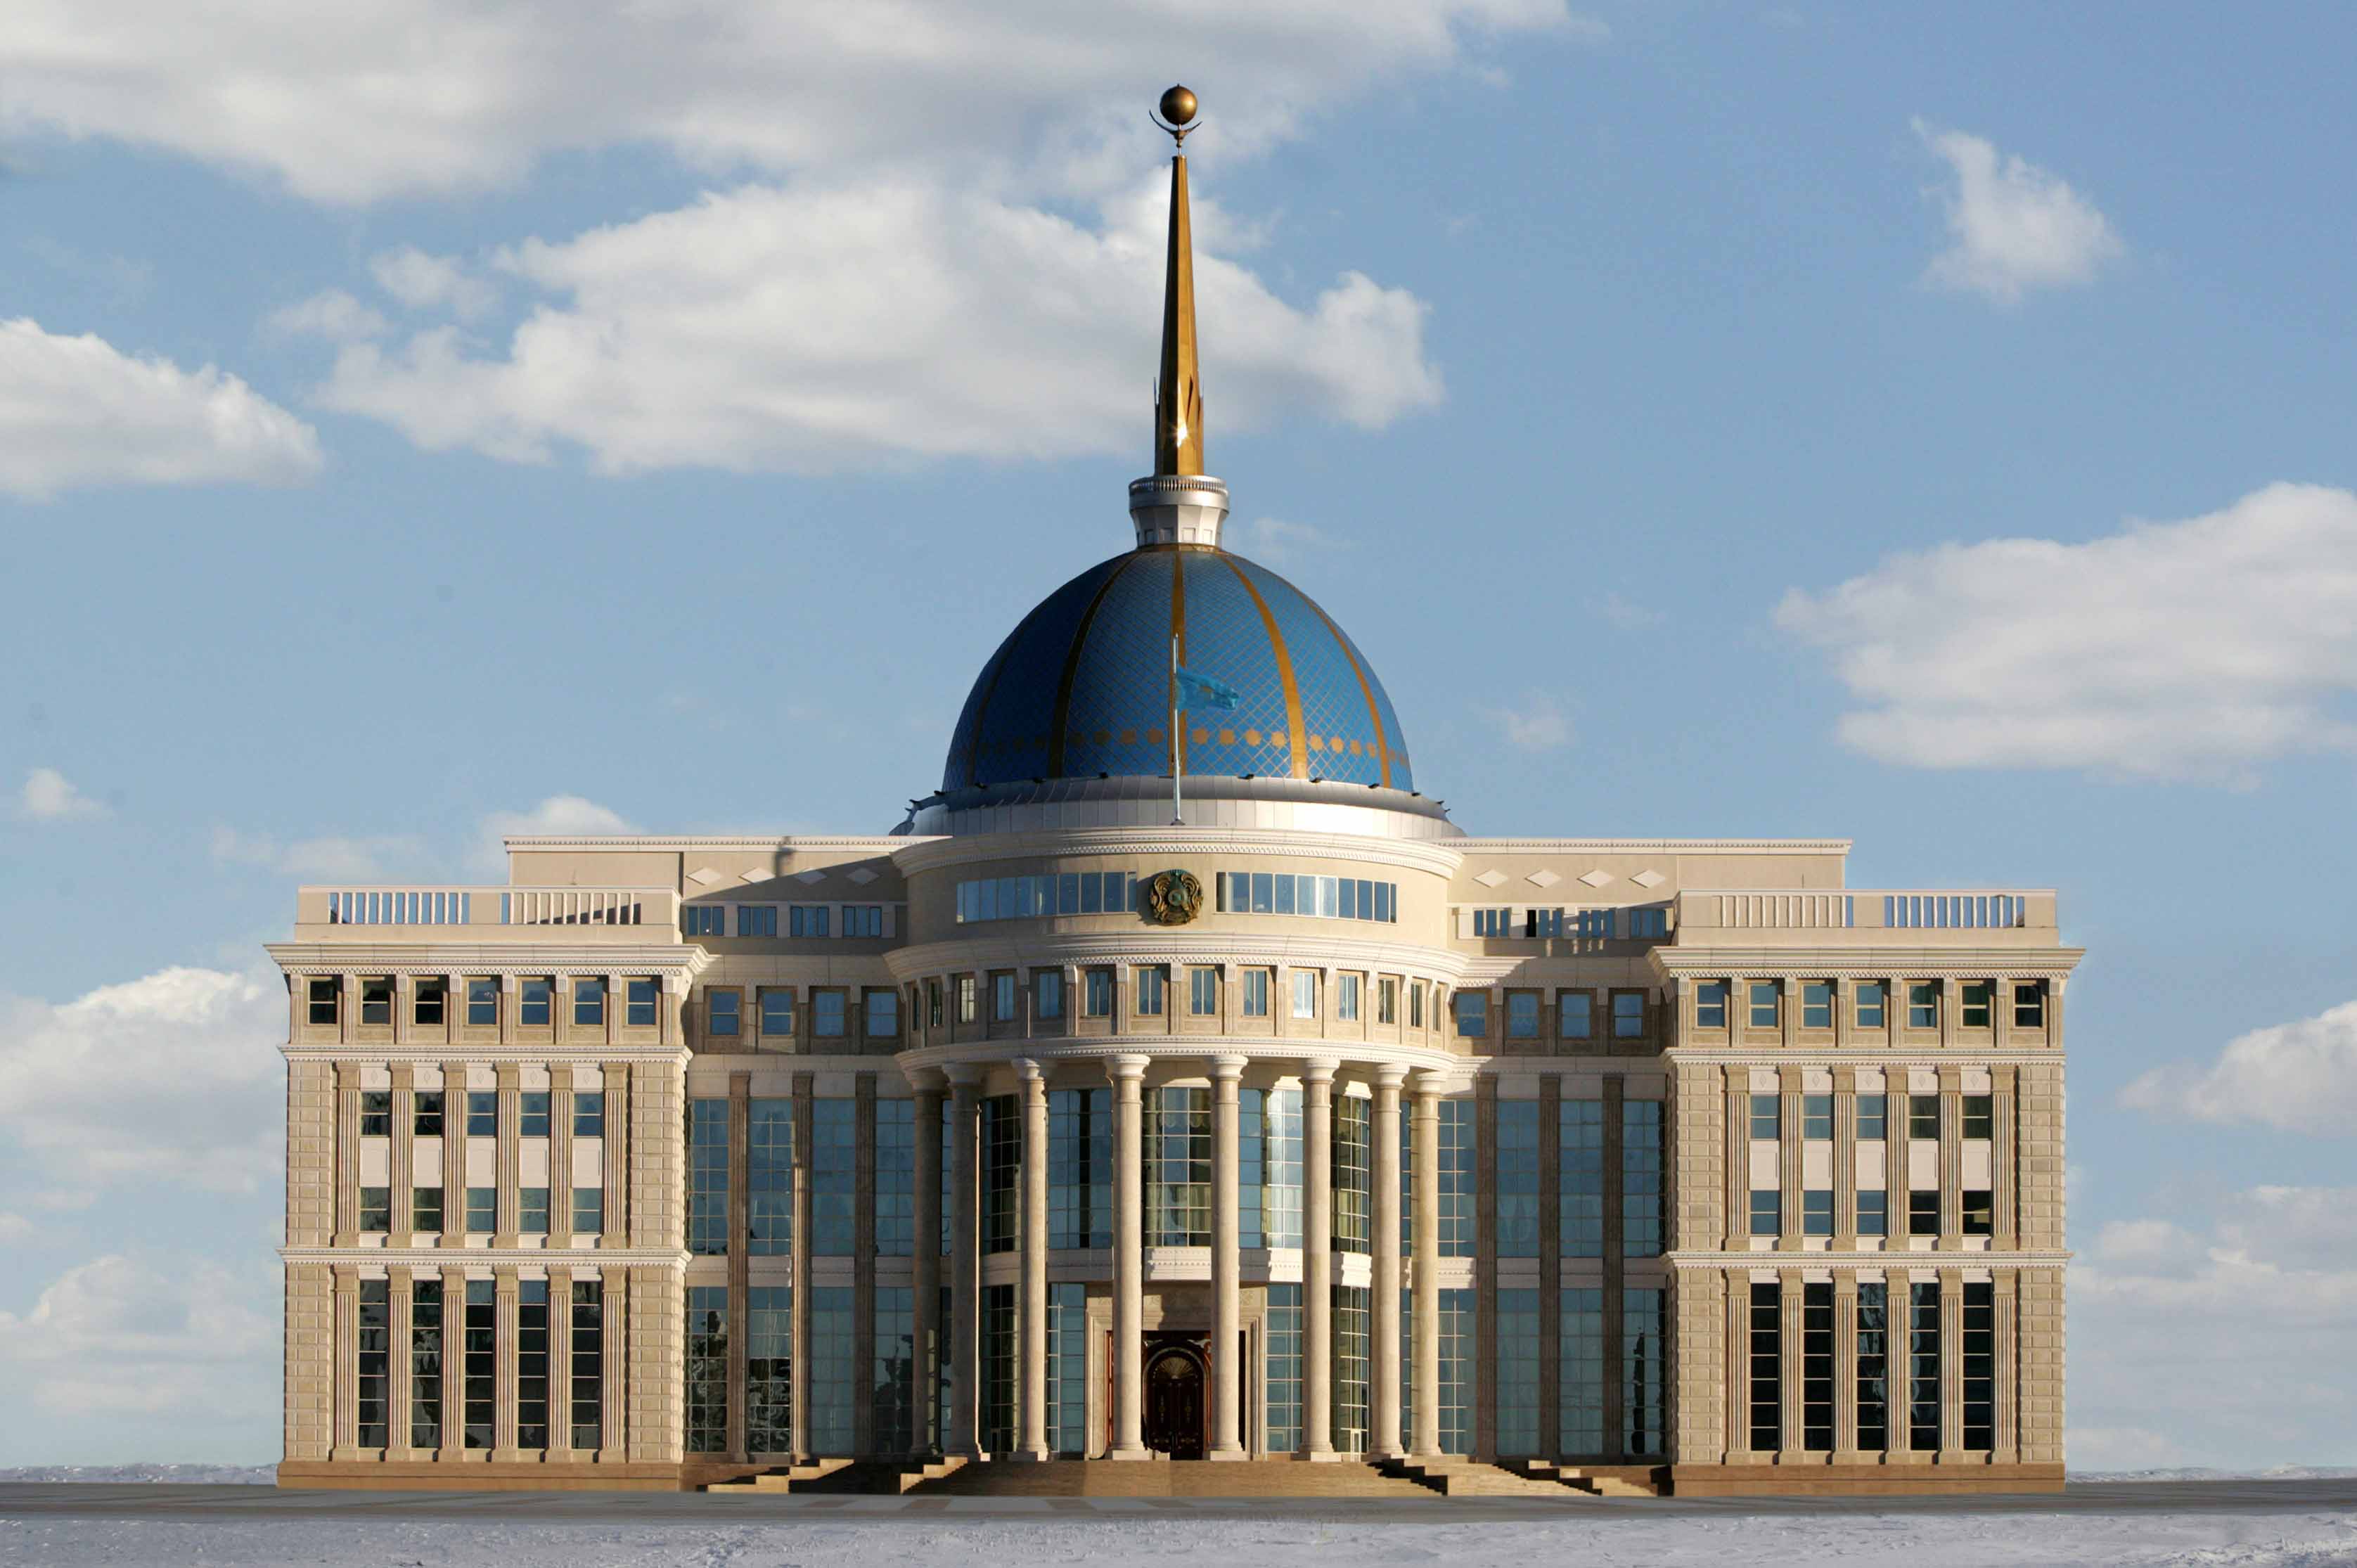 Two districts renamed in Pavlodar region - Kazakh Presidential decree